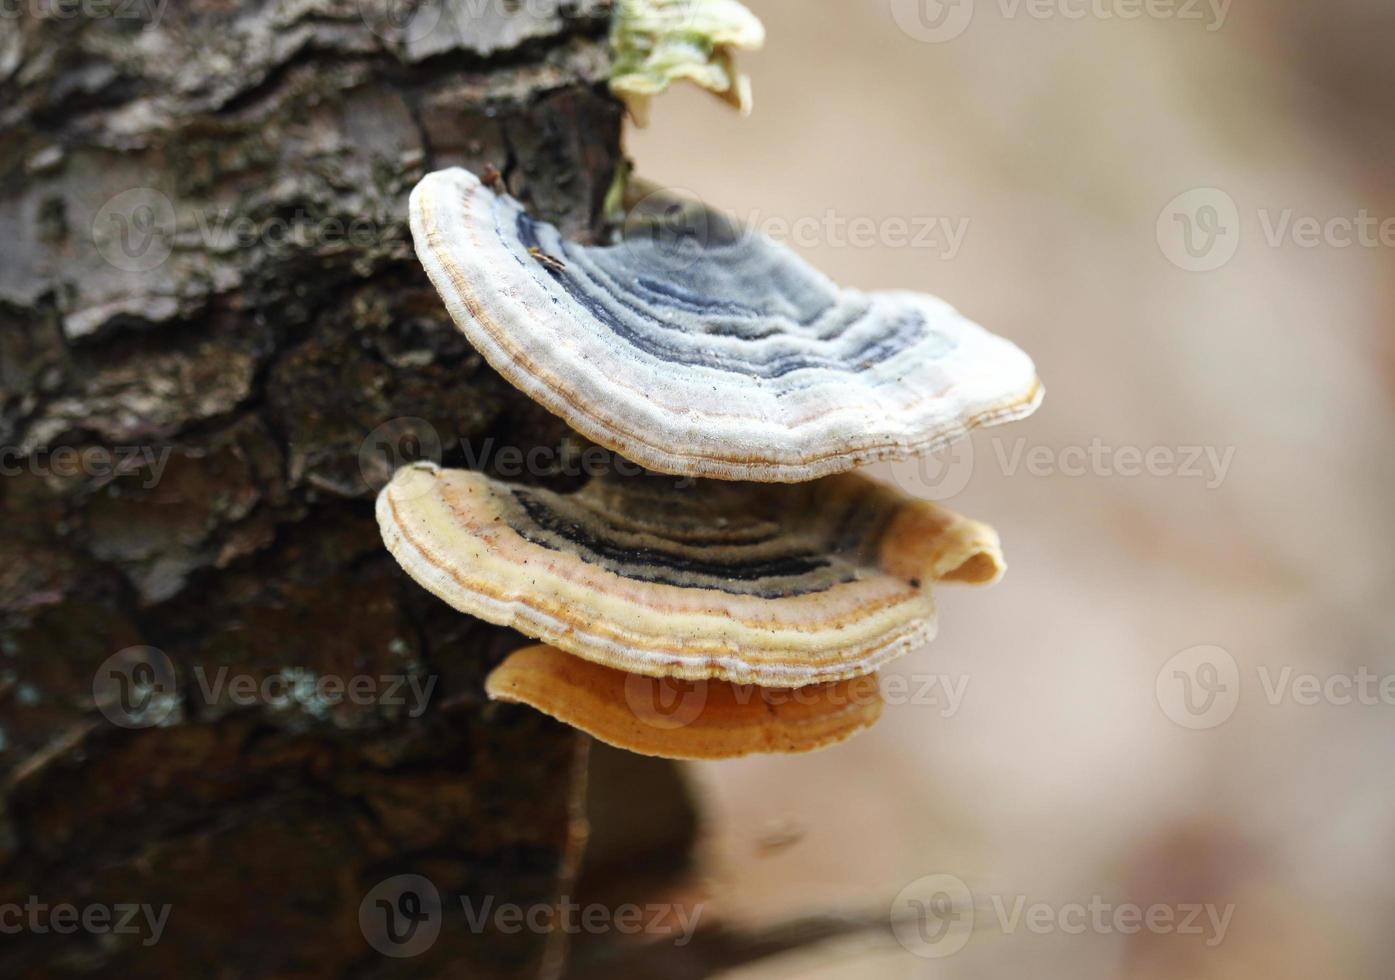 Wild young mushrooms growing on tree log photo